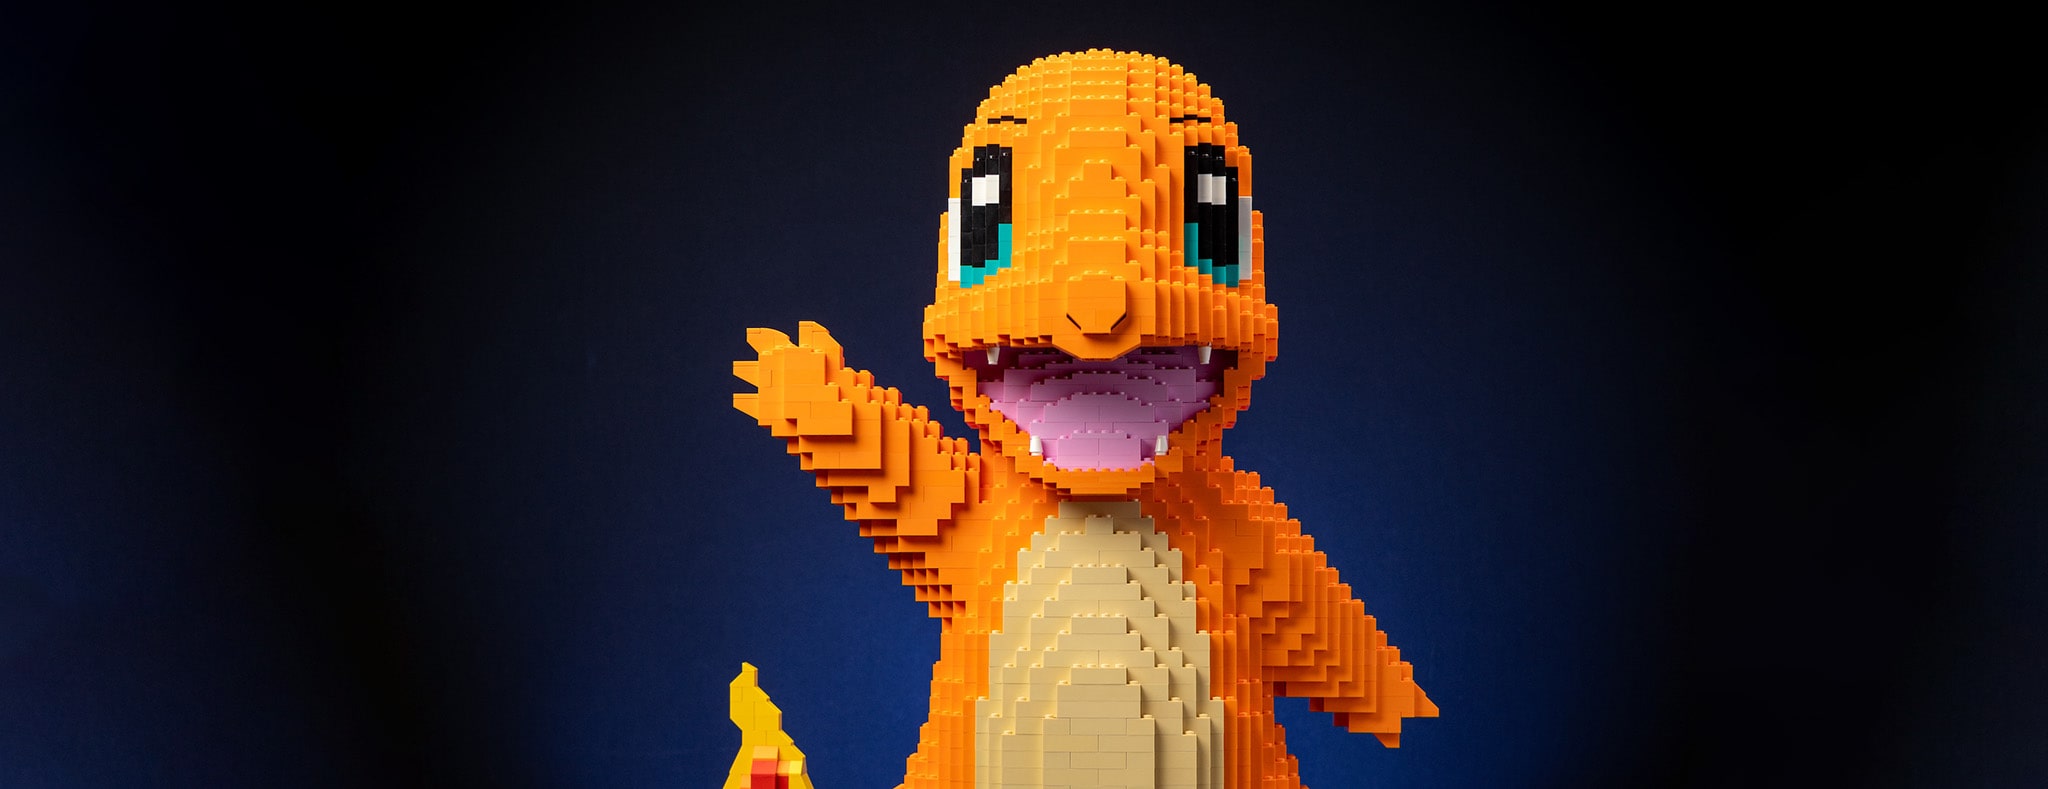 Fire Lizard Life-Sized Sculpture in LEGO Bricks Waving Hello